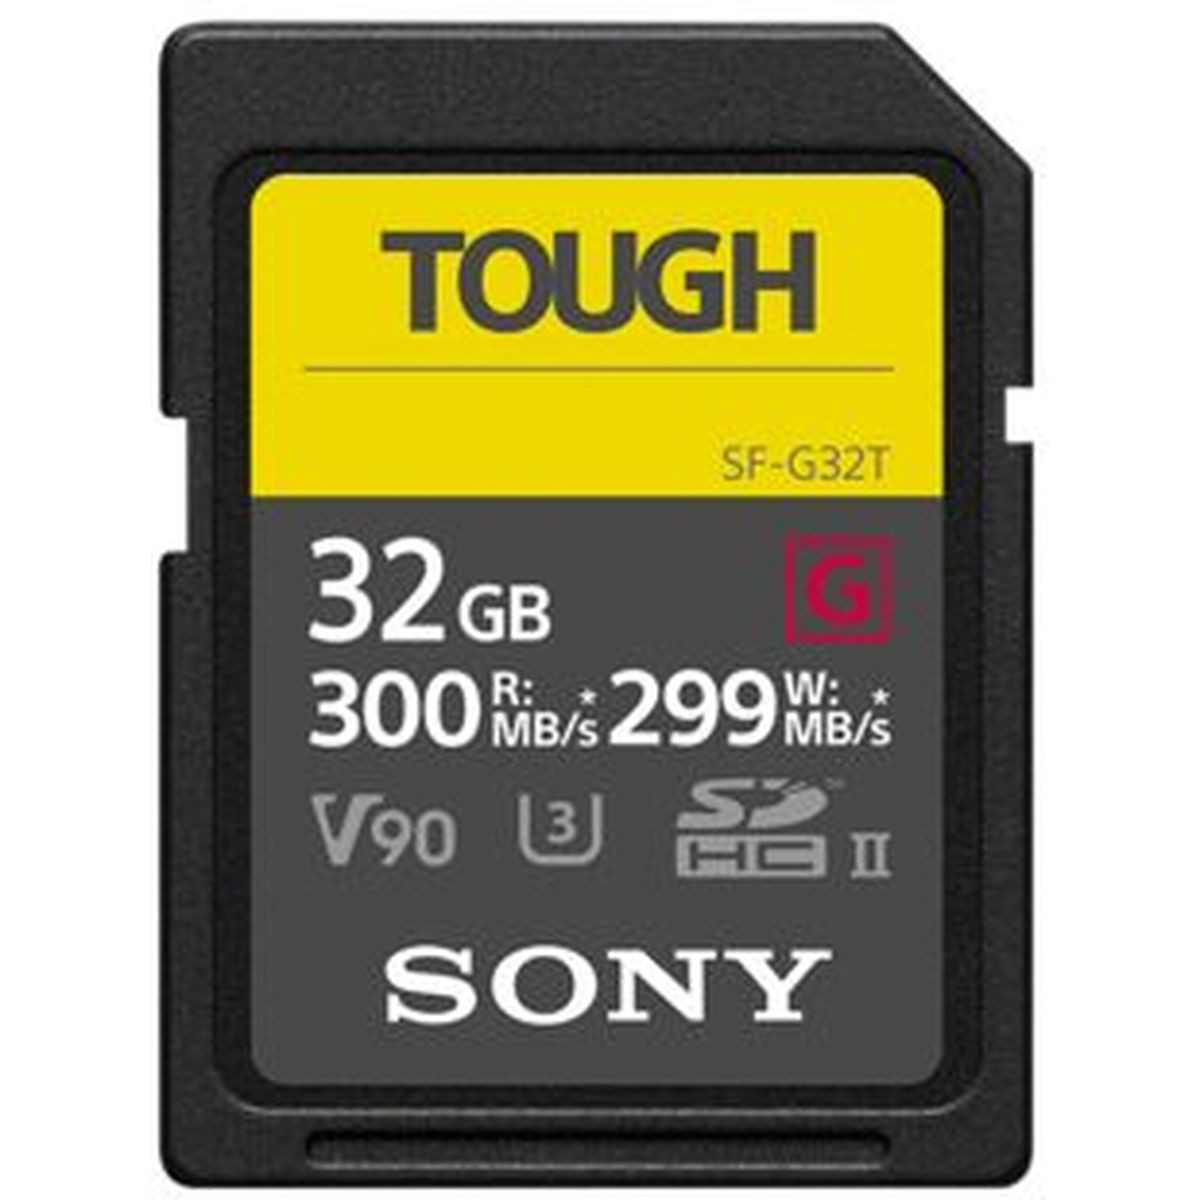 Sony ProSD Tough 18x stronger - 32GB UHS-II R300 W299 - V90